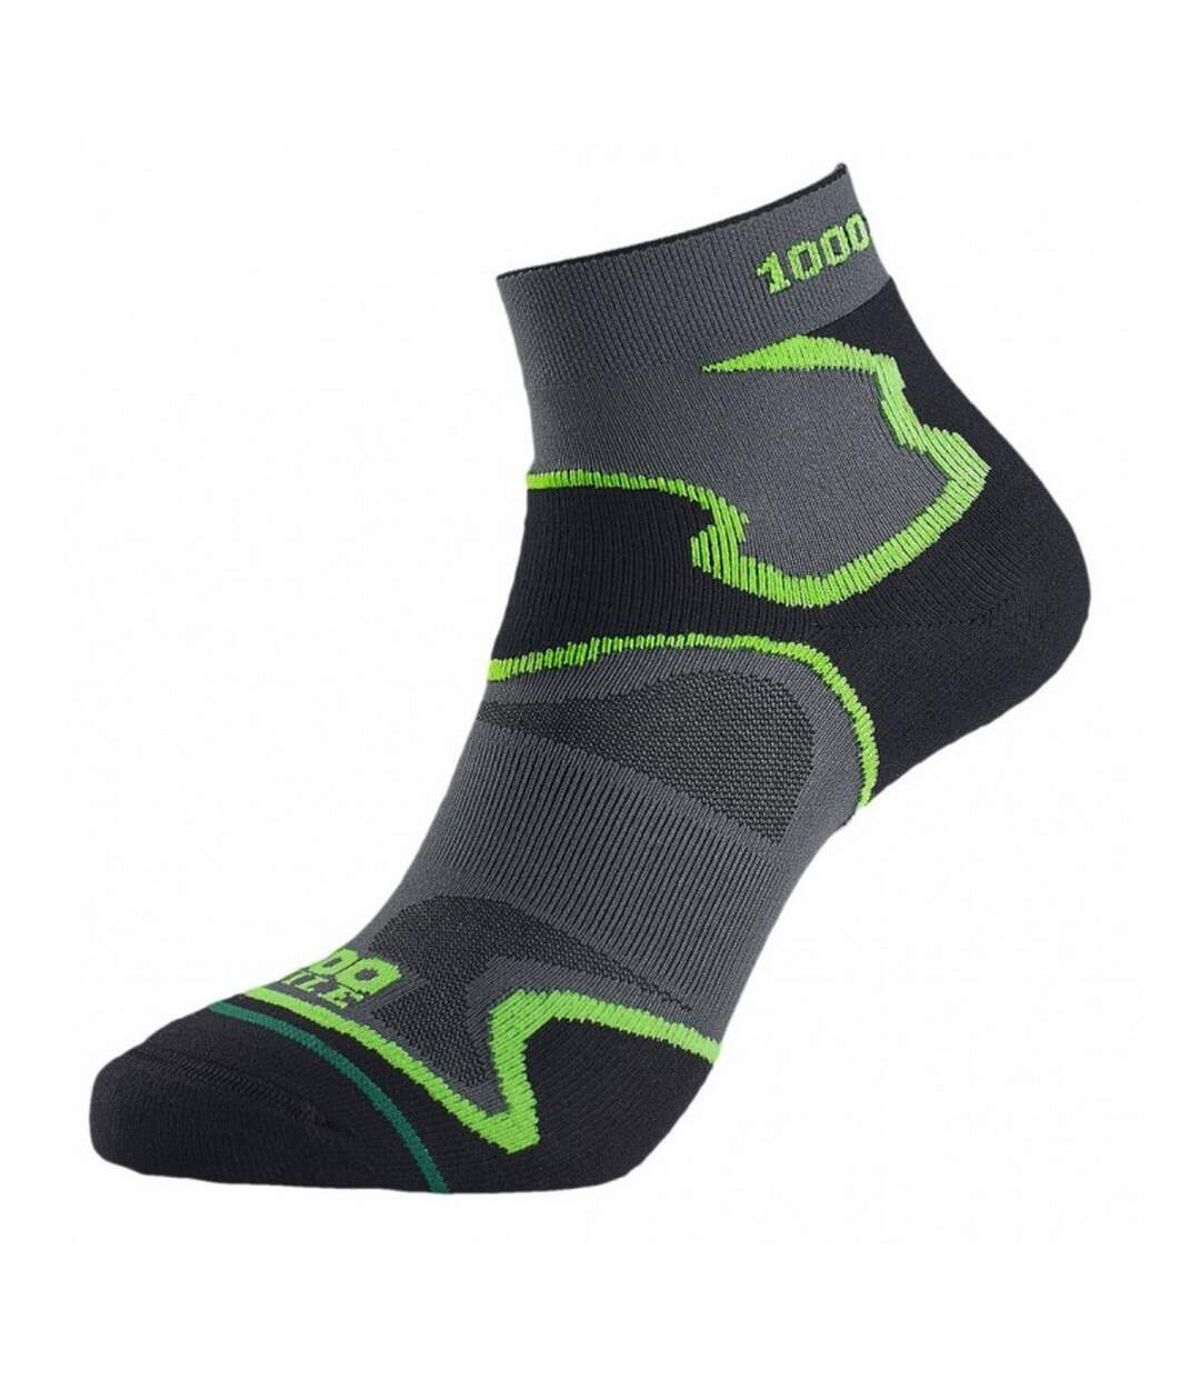 1000 Mile Mens Fusion Ankle Socks (Black/Green) - UTCS215